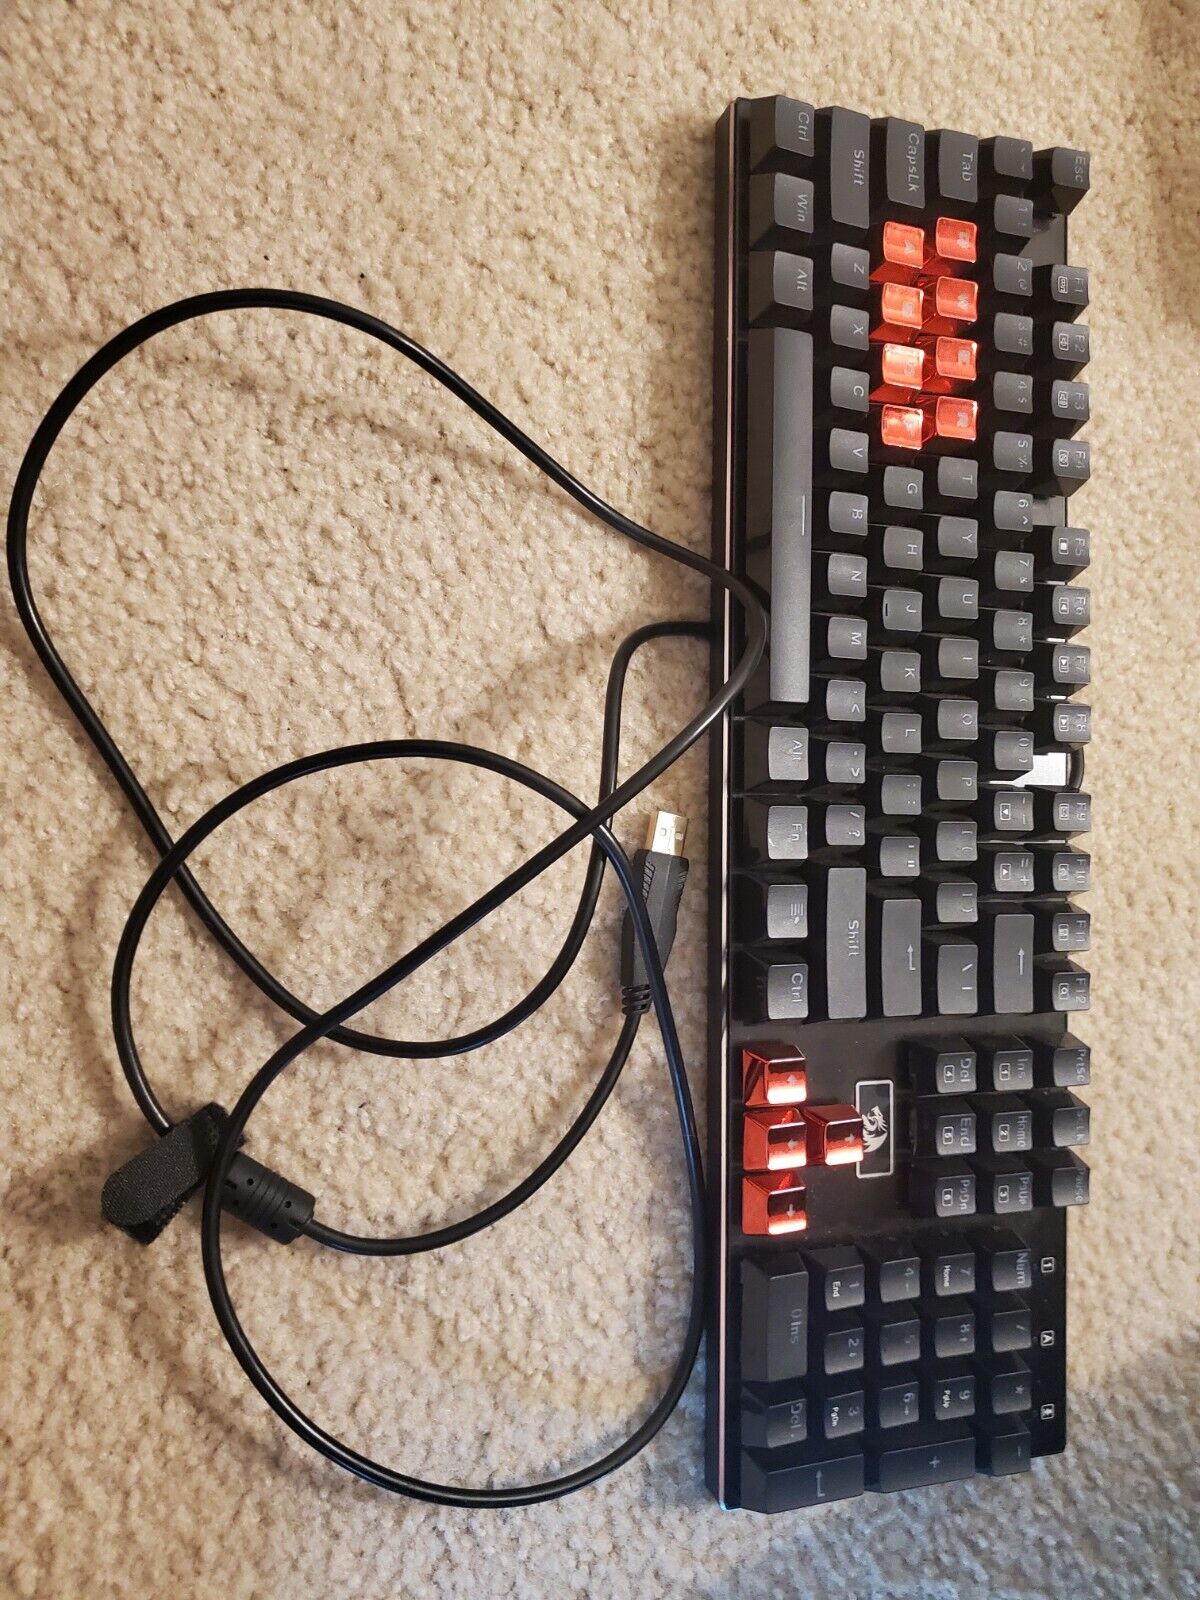 RedDragon Mechanical Gaming Keyboard K556 RGB. High Quality LED. Brown Switches